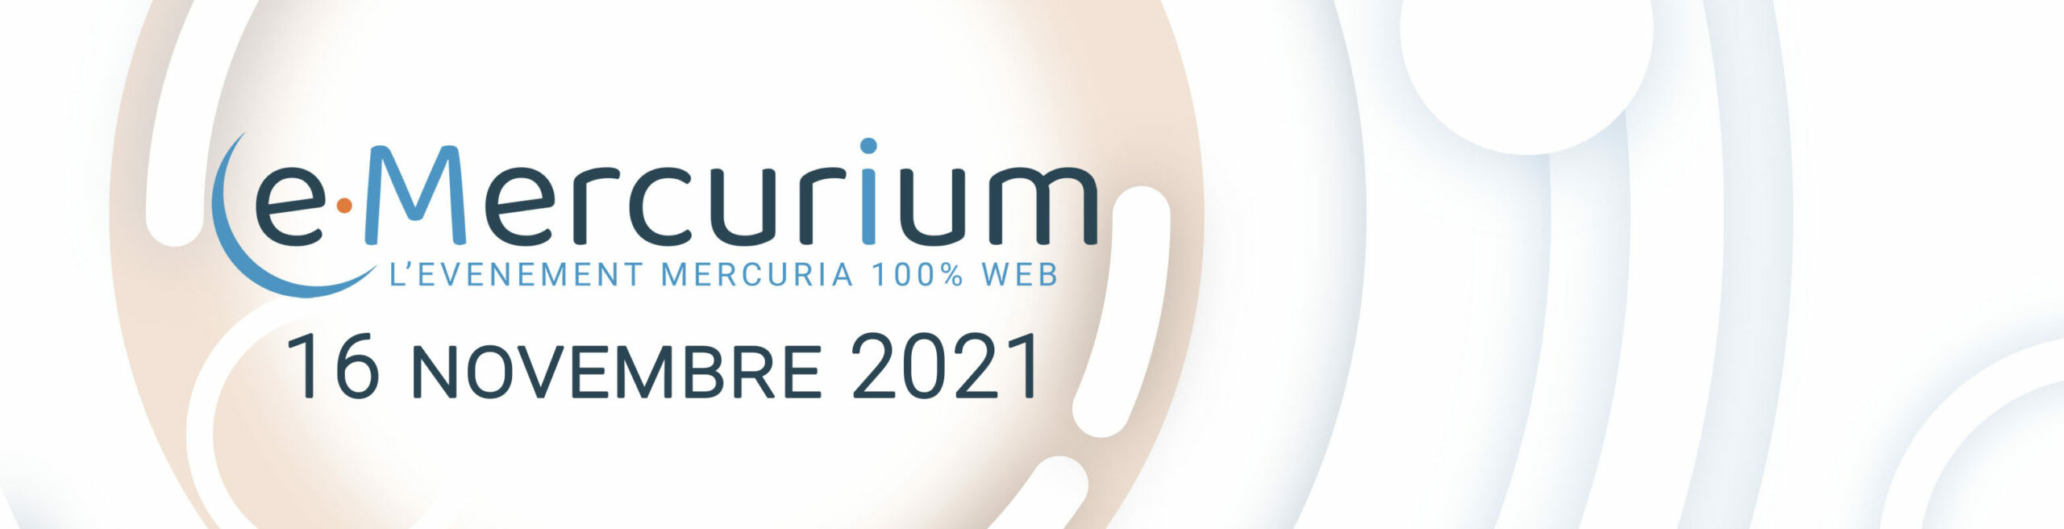 e-mercurium 2021 : 16 Novembre 2021 - Inscription